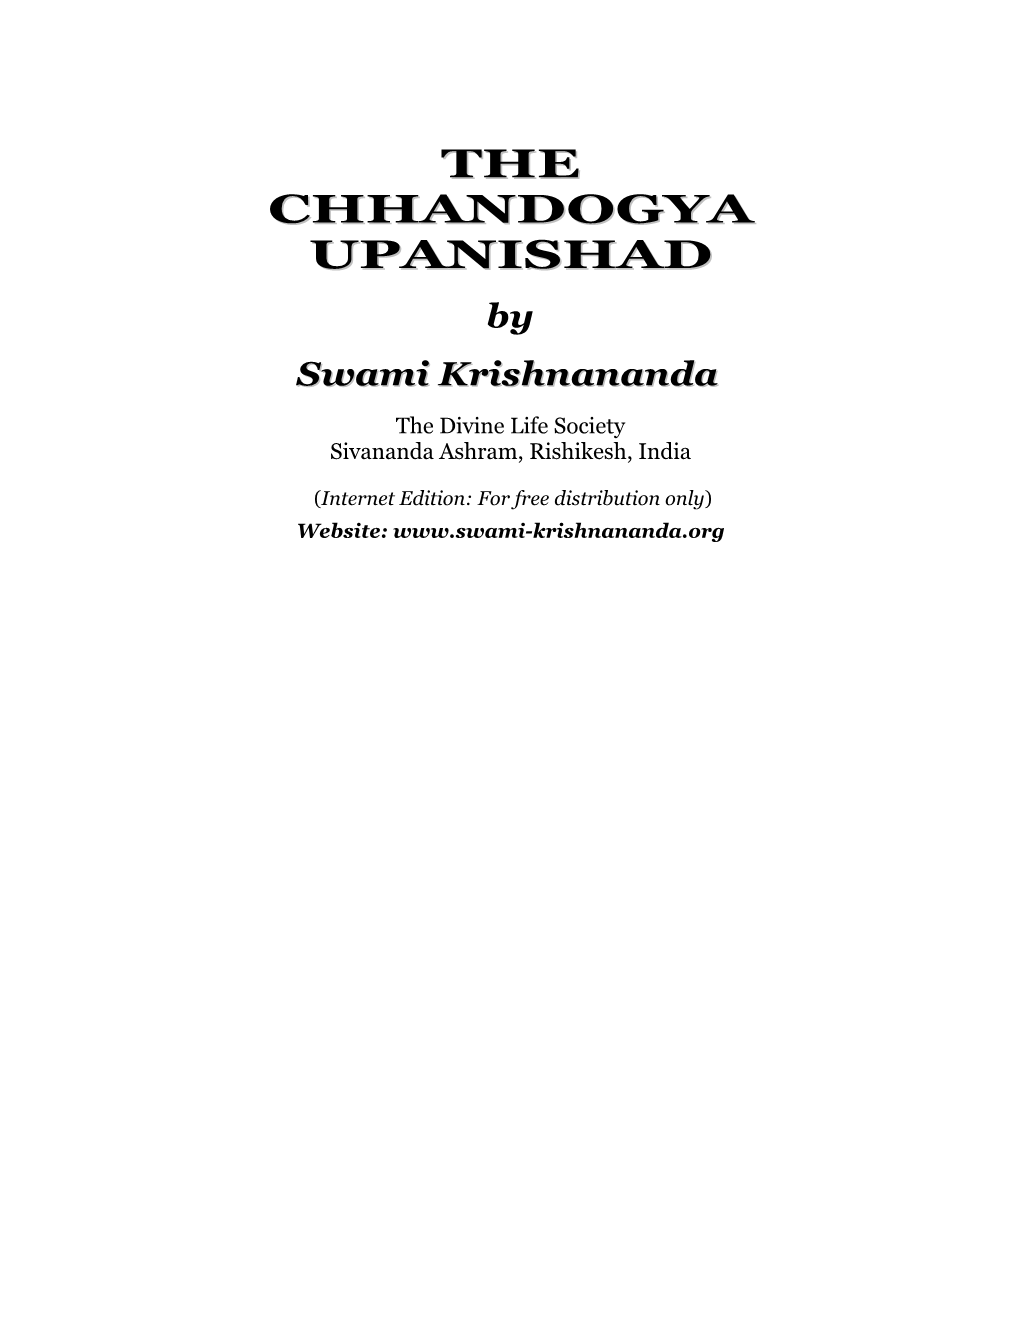 The Chhandogya Upanishad